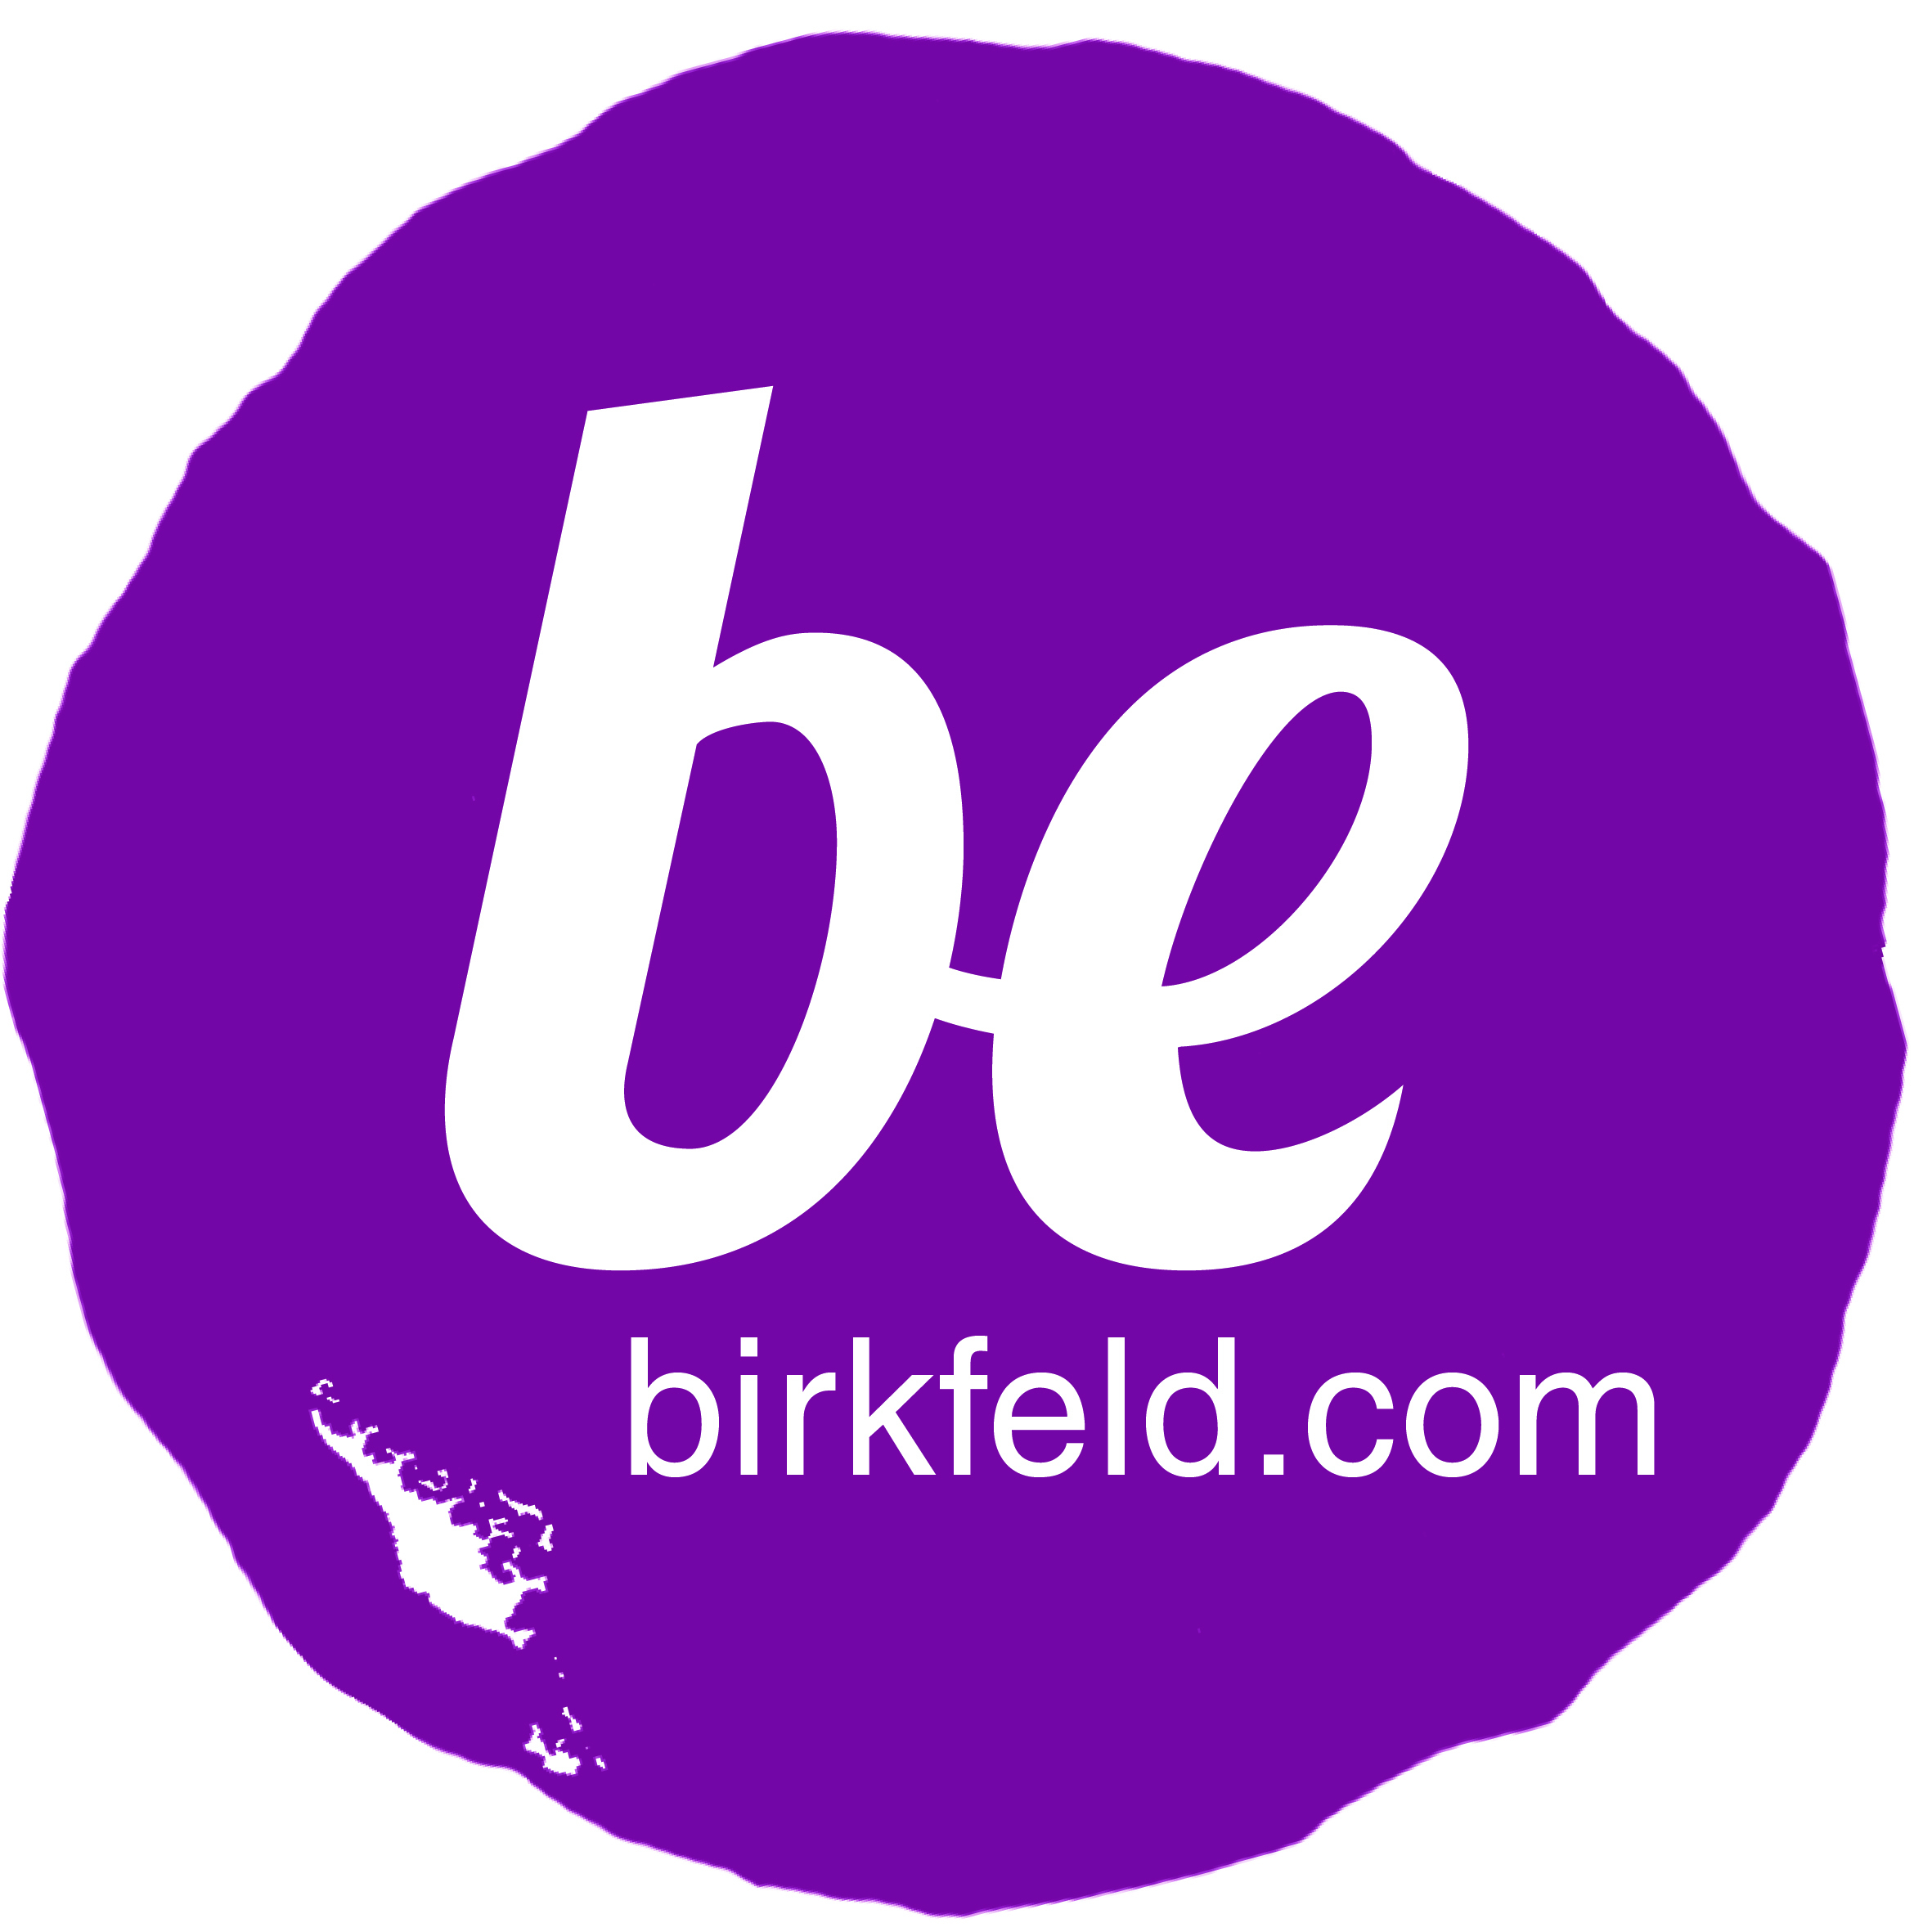 birkfeld.com